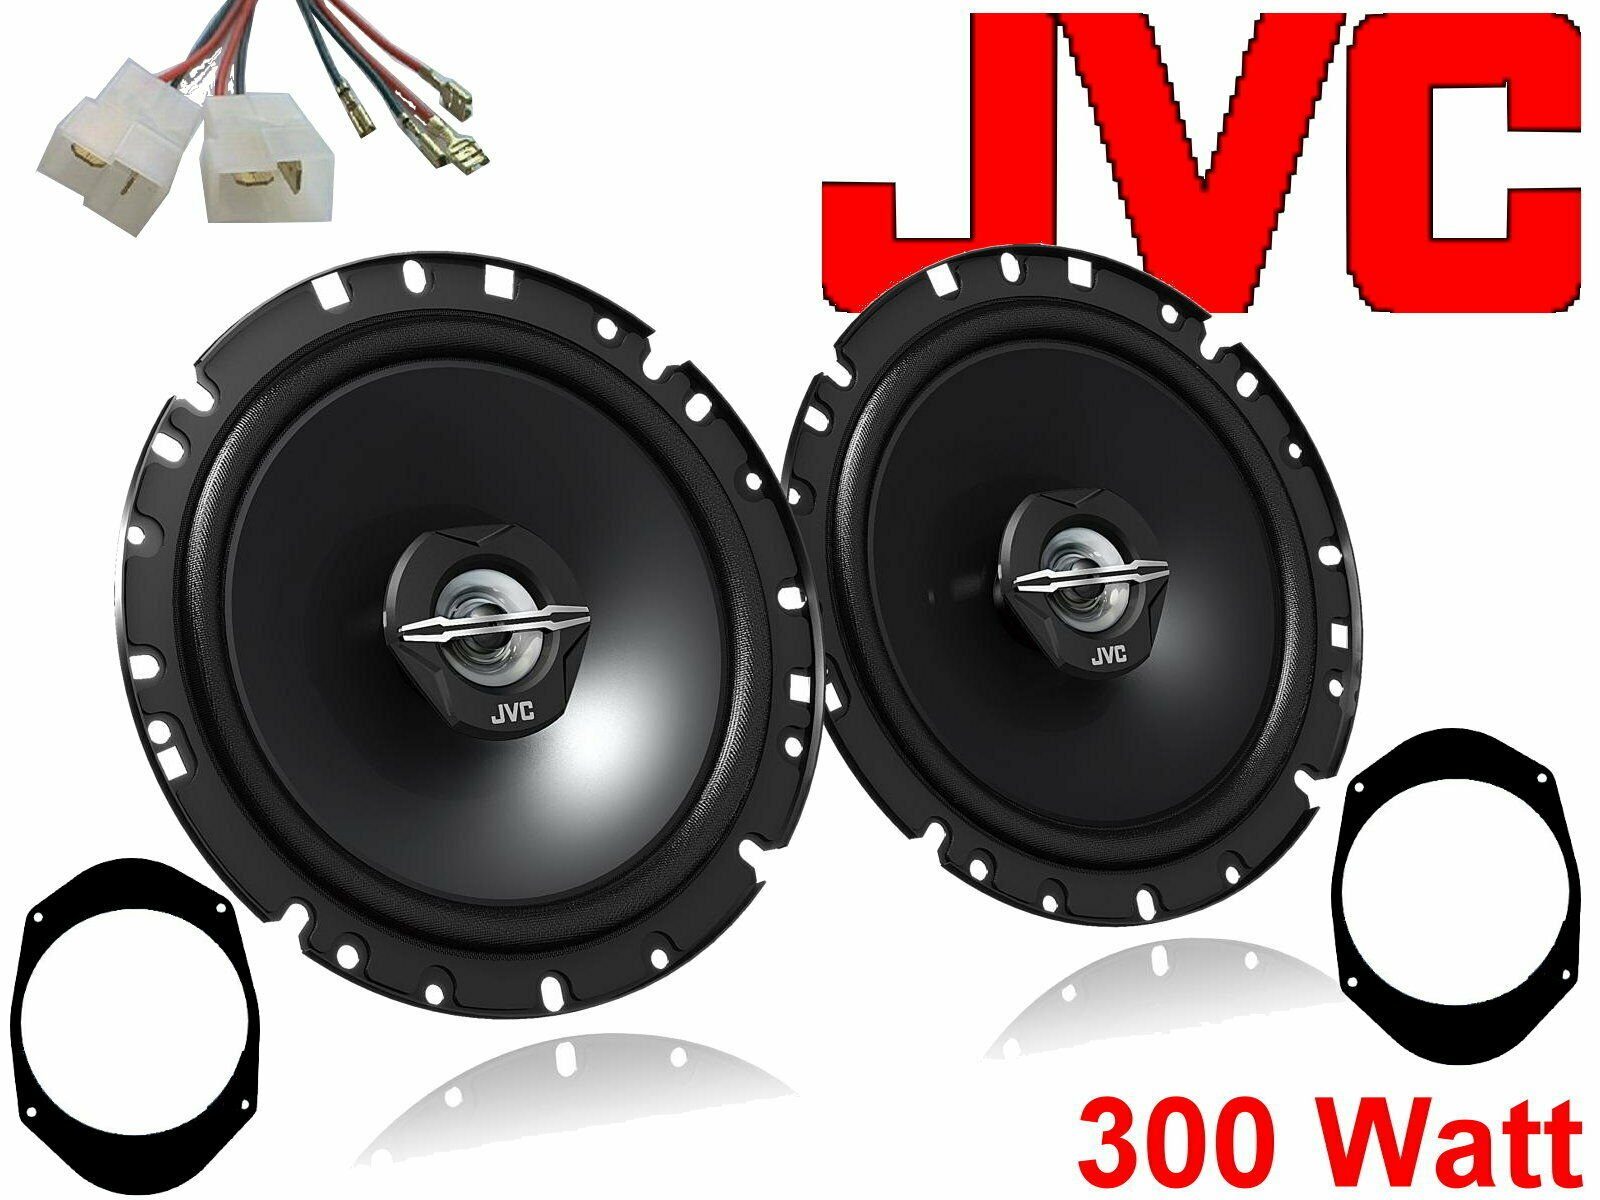 DSX JVC 300 W passend für Ford Fusion 02 - 12 Lautspr Auto-Lautsprecher (30 W) | Auto-Lautsprecher